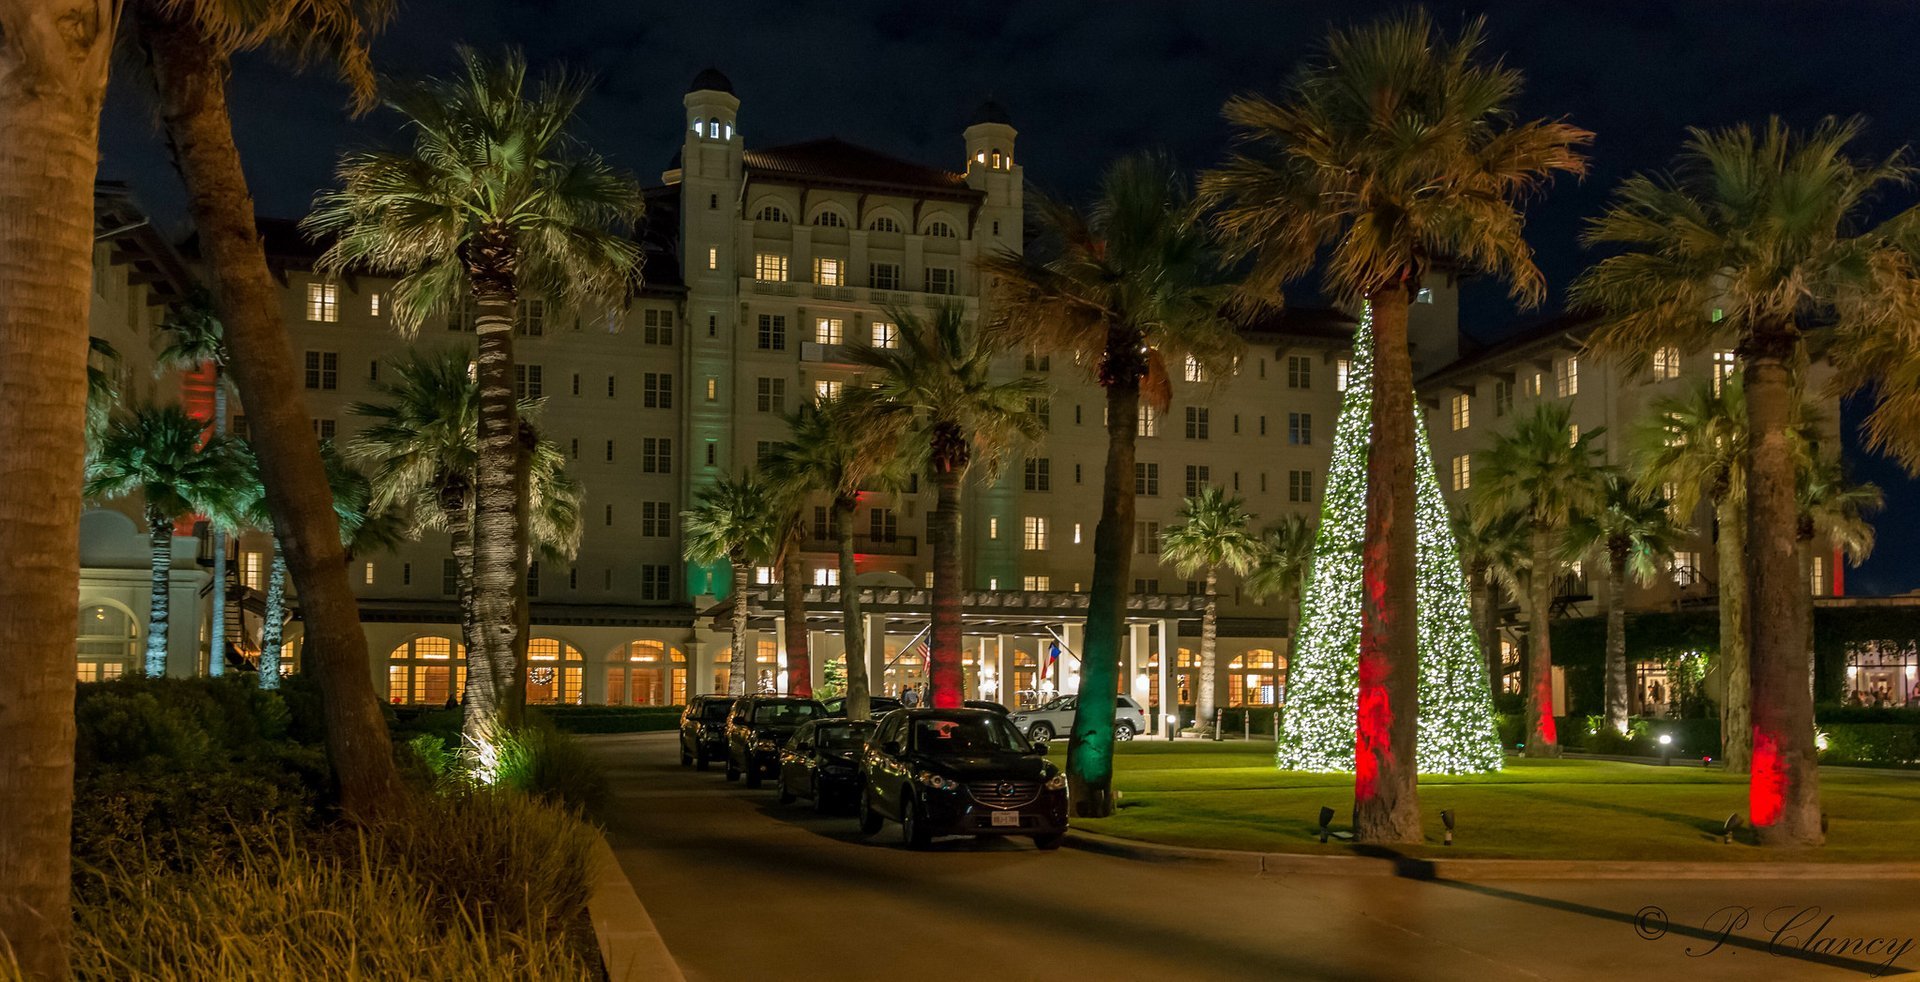 Christmas Events in Galveston 2022, Galveston, TX - Dates